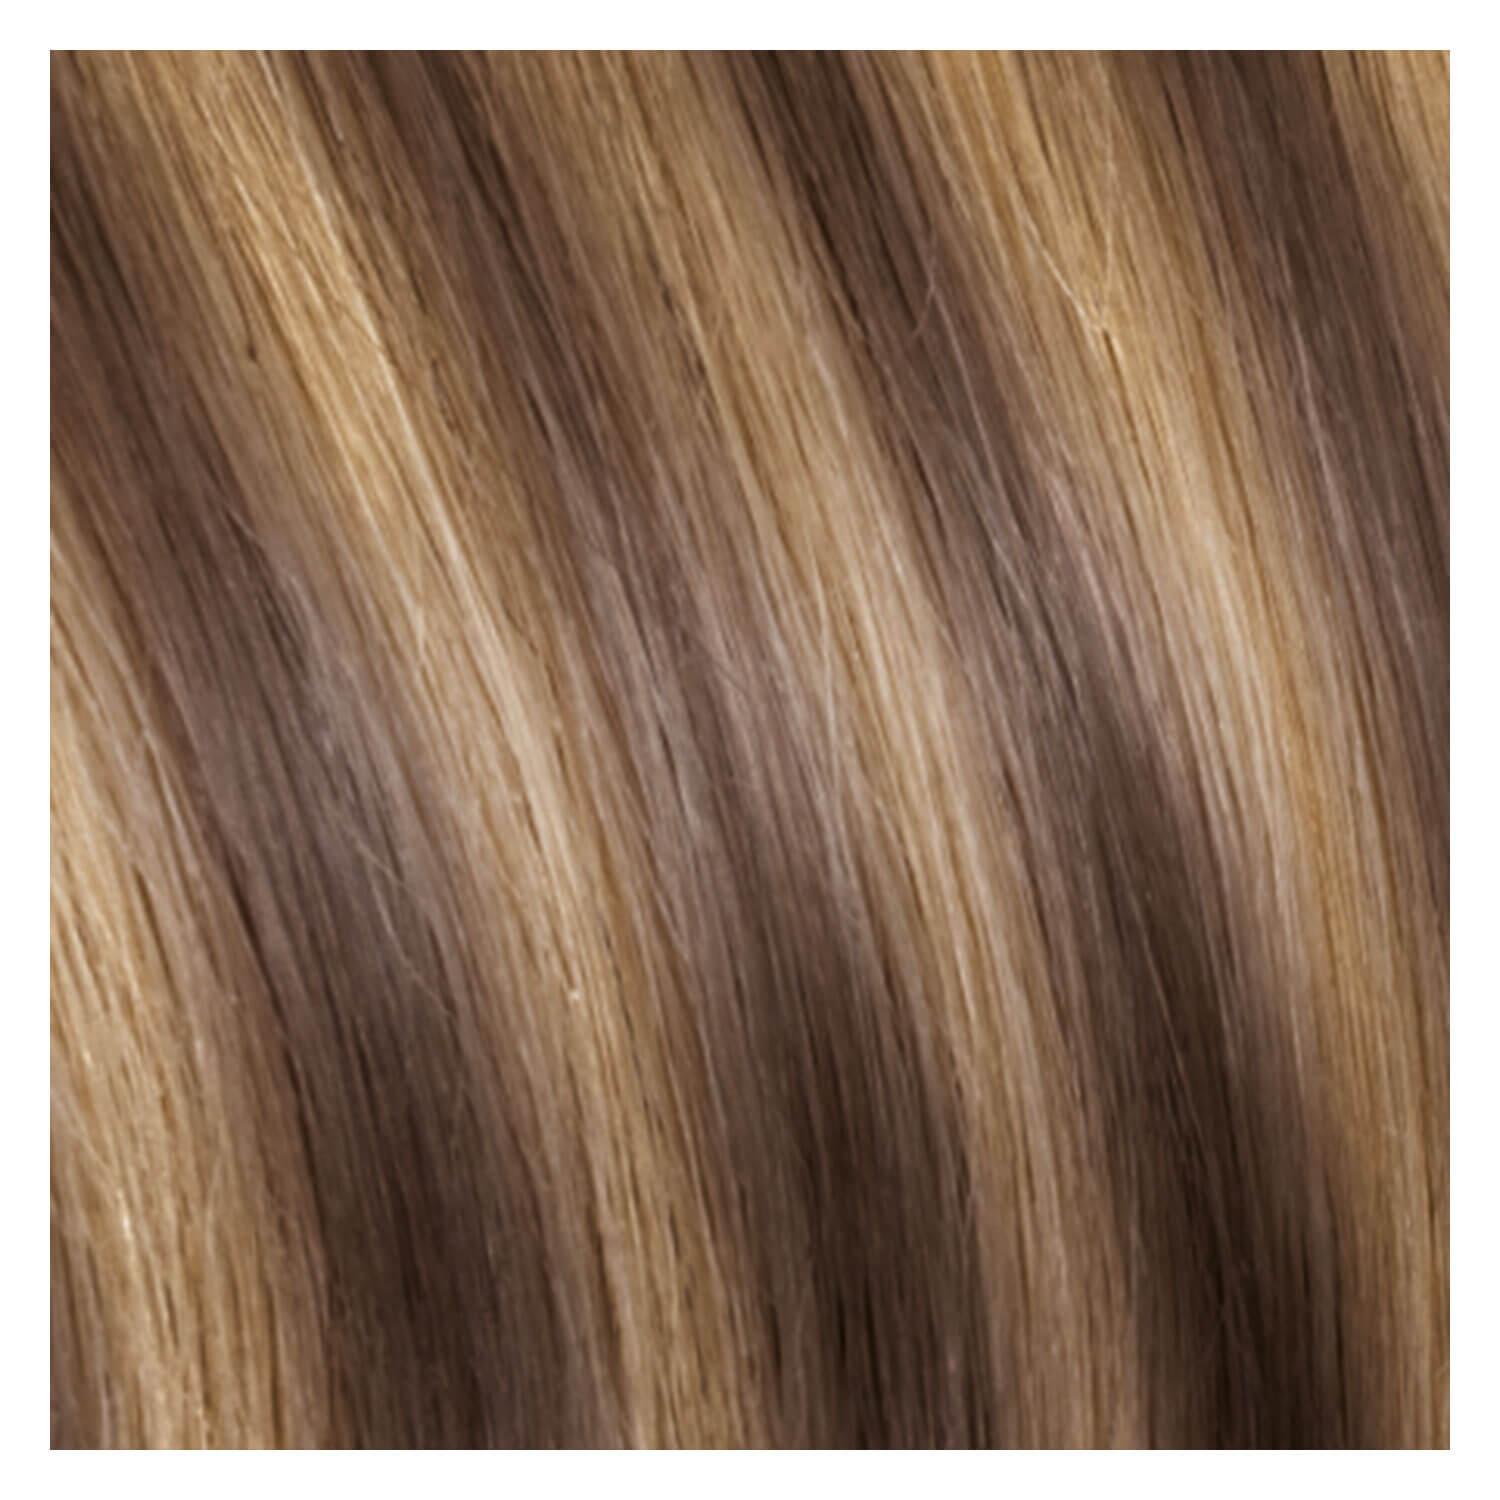 SHE Bonding-System Hair Extensions Straight - M8/26 Dunkelblond/Honigblond 55/60cm